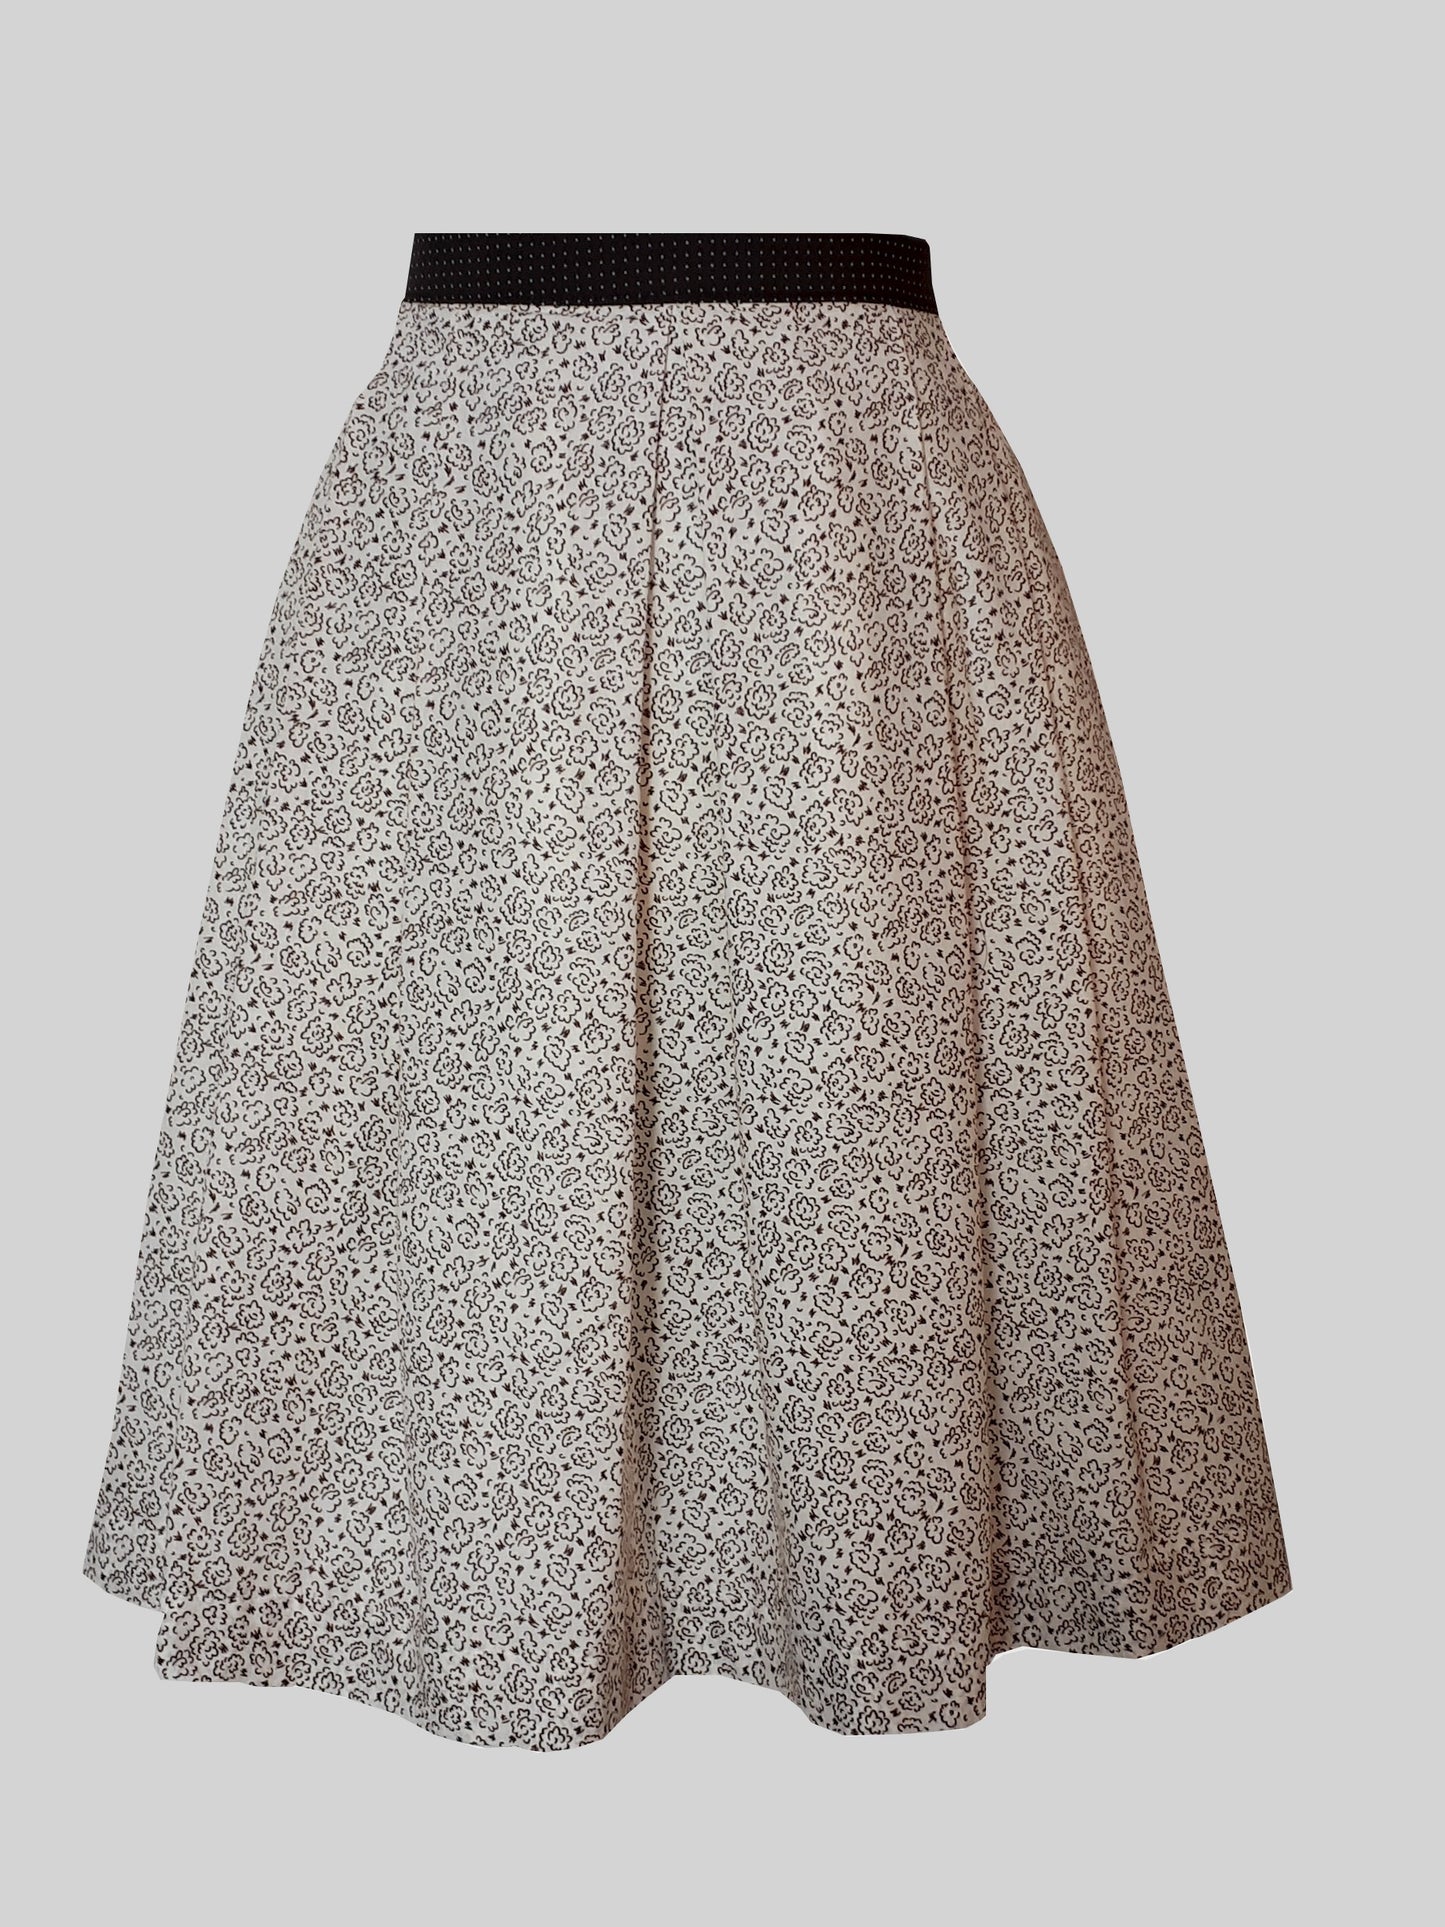 Women's traditional skirt "Babsi" ecrue-brown